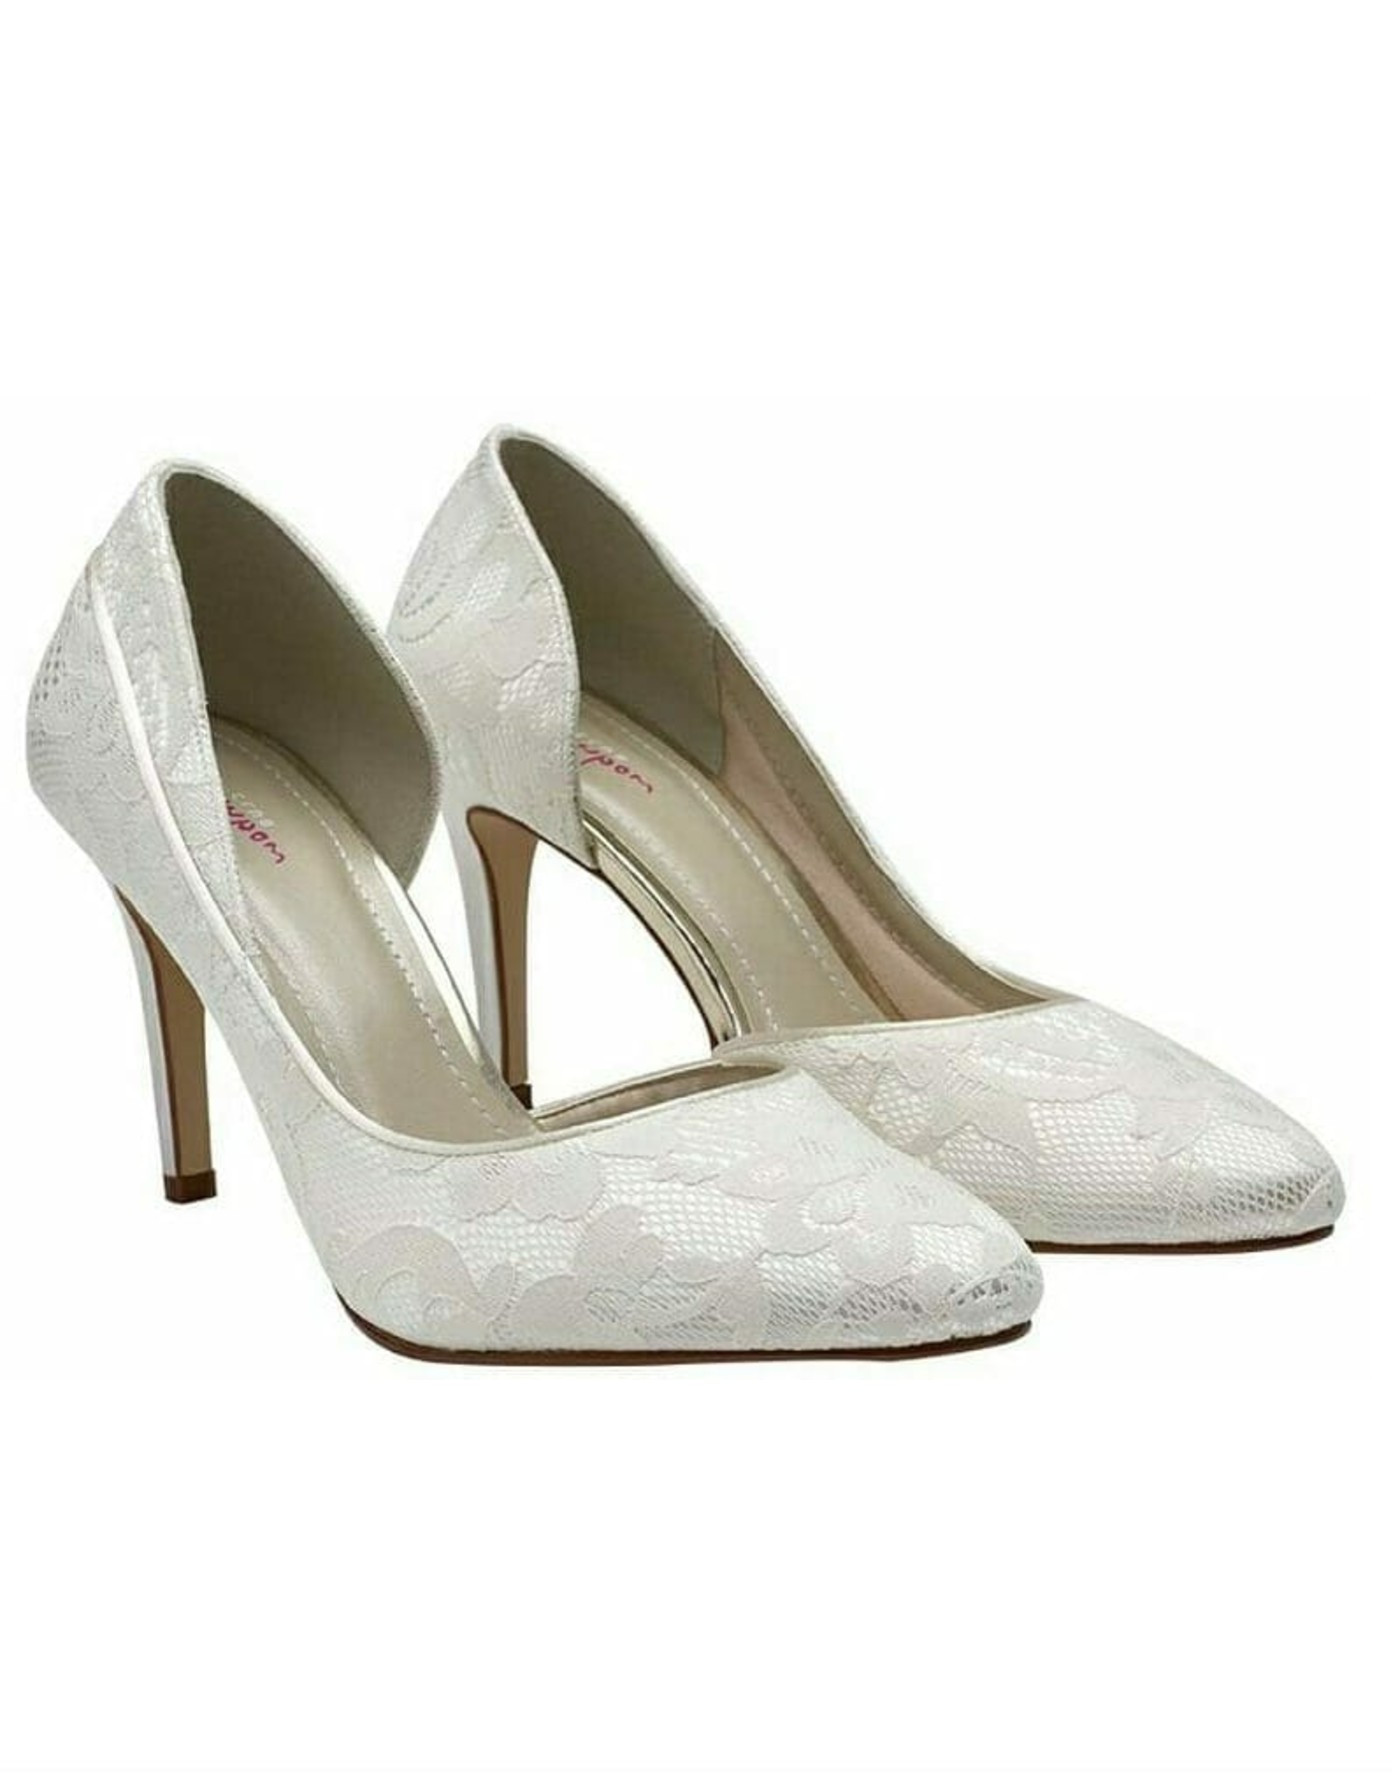 Jessica Wedding Shoe